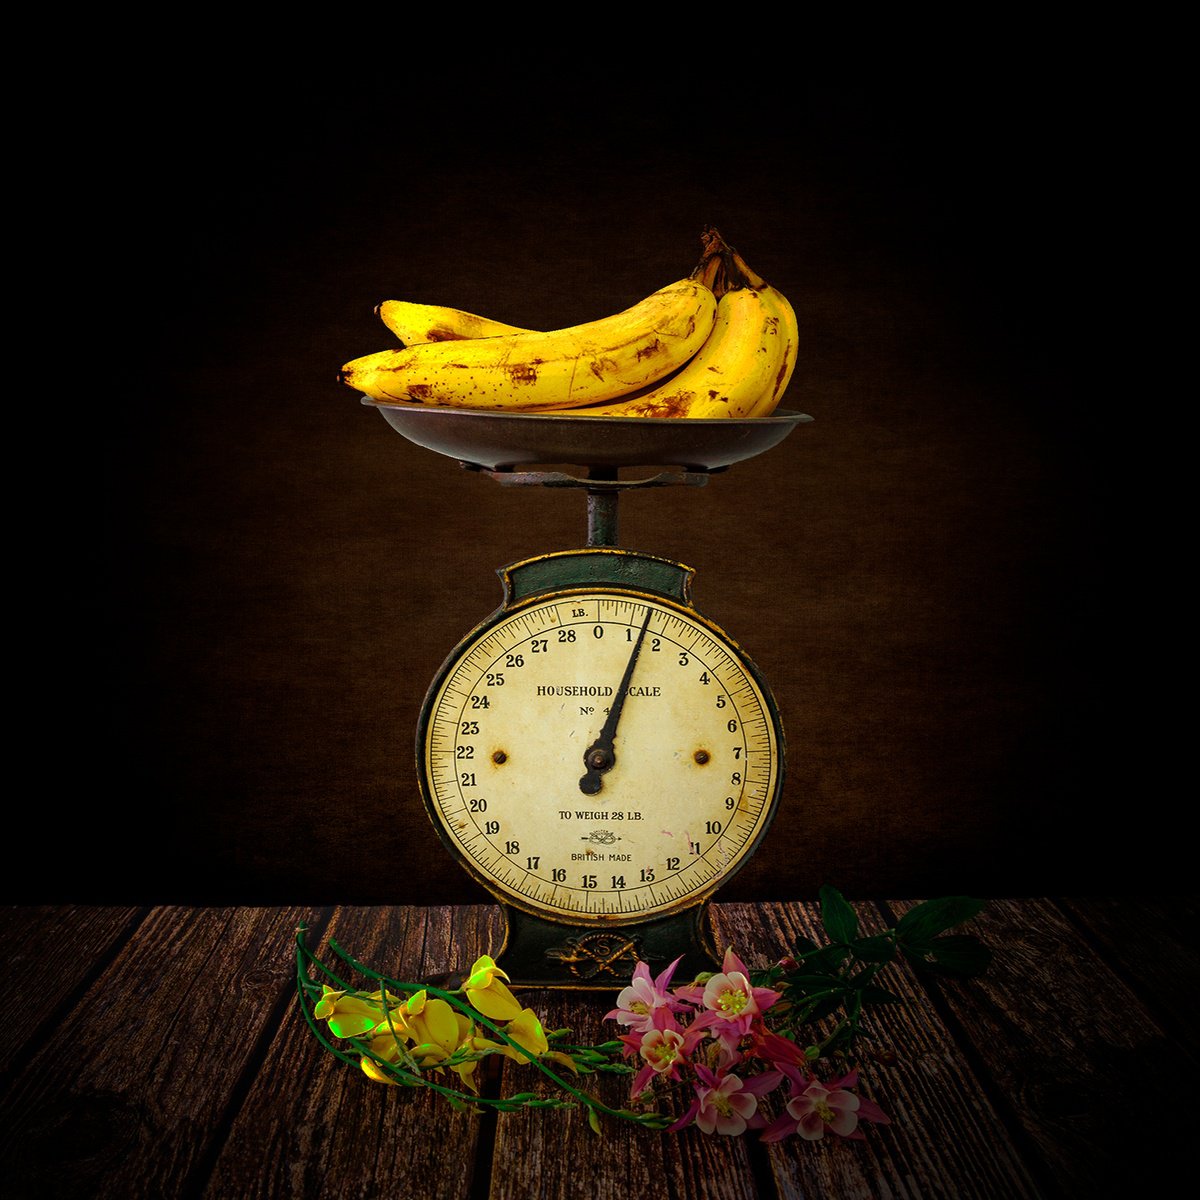 ’Banana’s not in Pyjamas’ - Still Life Photography by Michael McHugh